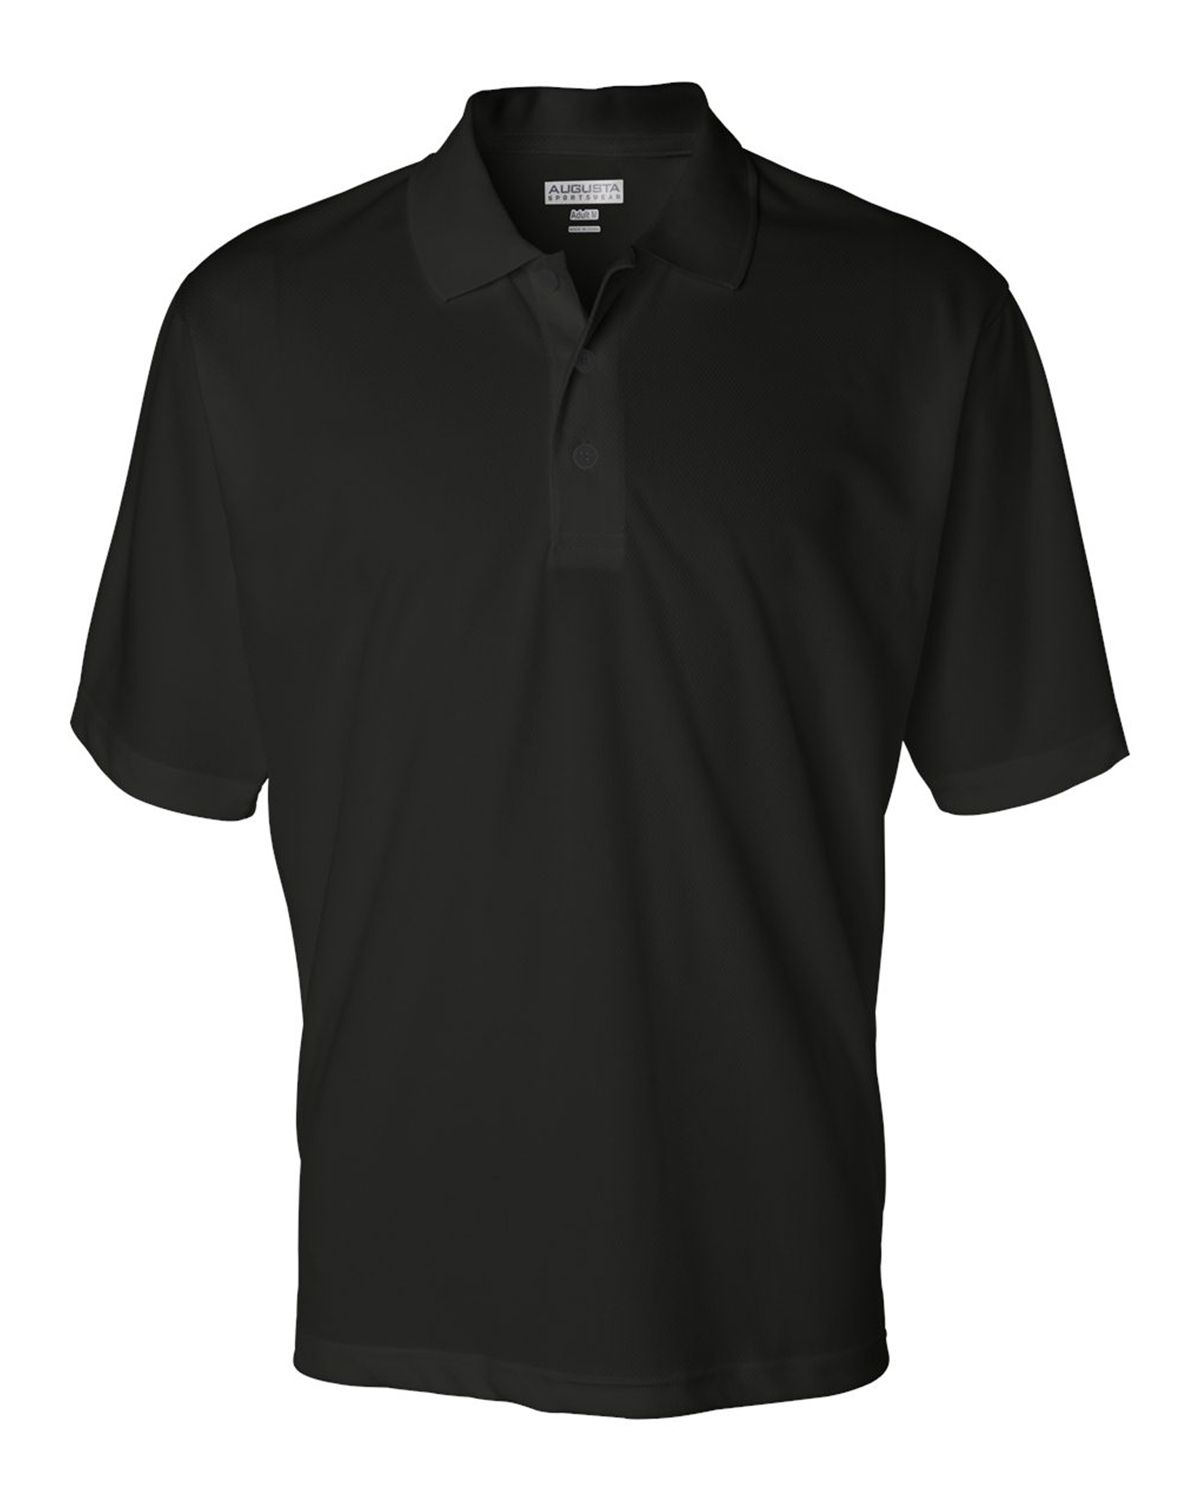 Augusta Sportswear 5095 Men's Wicking Mesh Sport Shirt